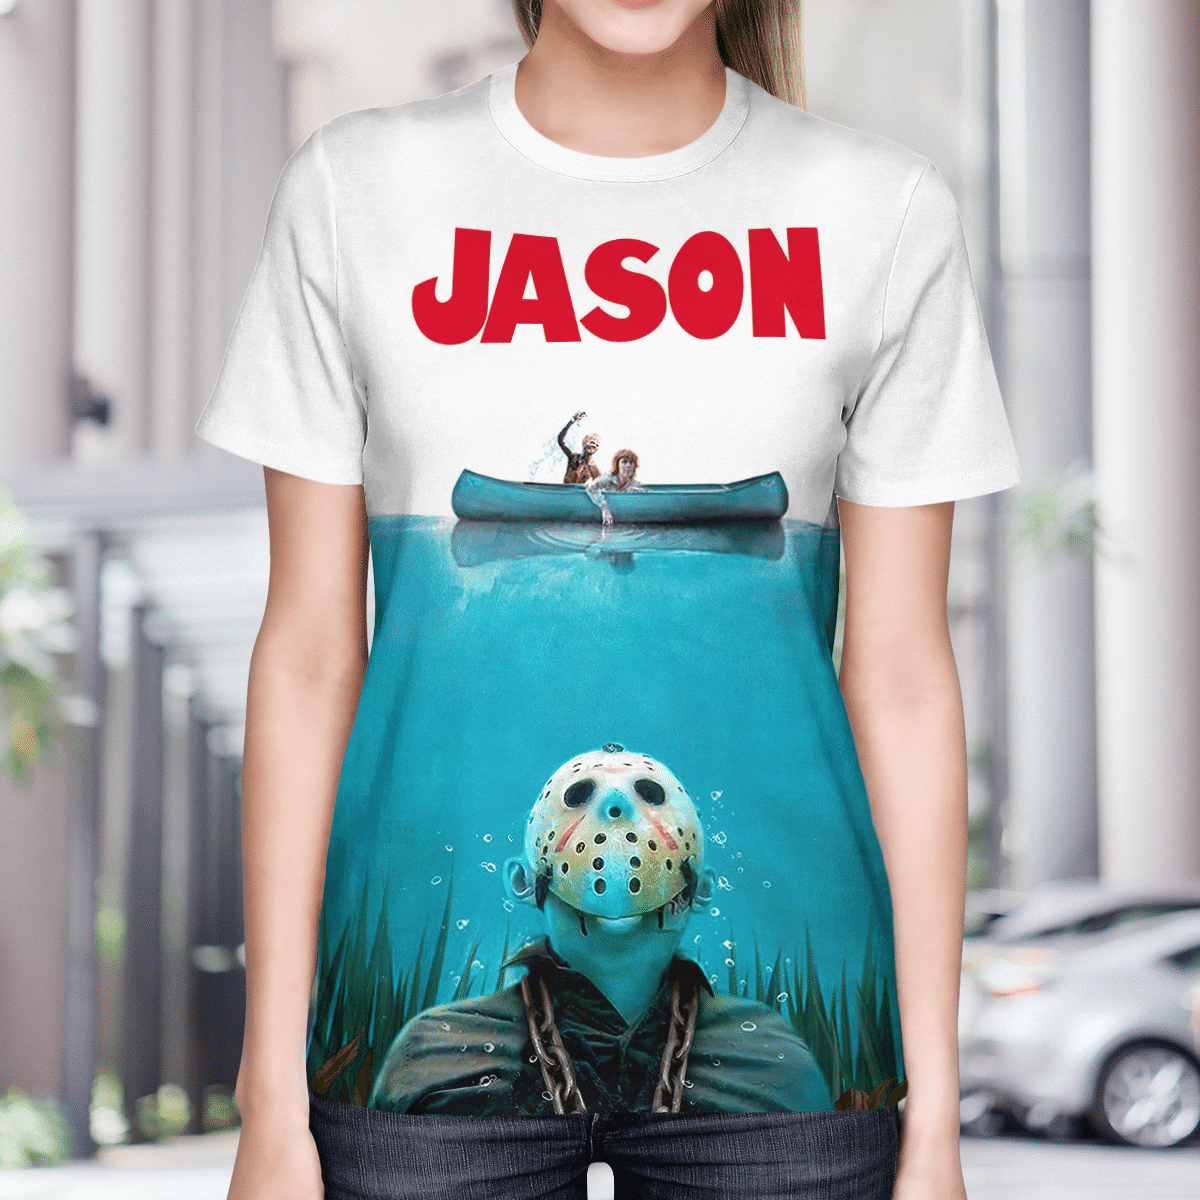 Jason Killer By Nature T-shirt